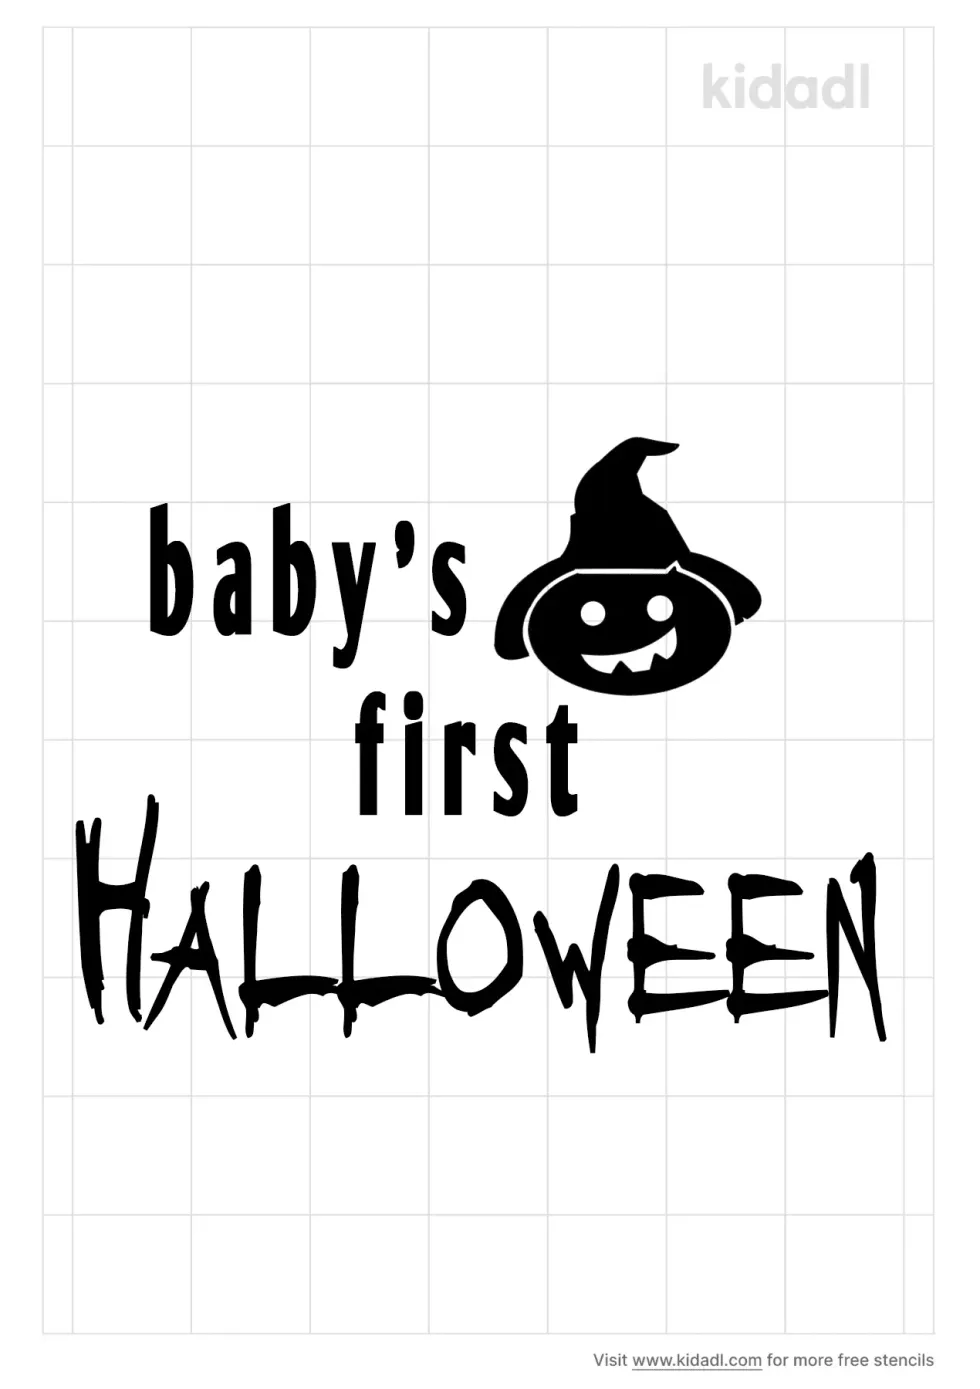 Baby's 1st Halloween